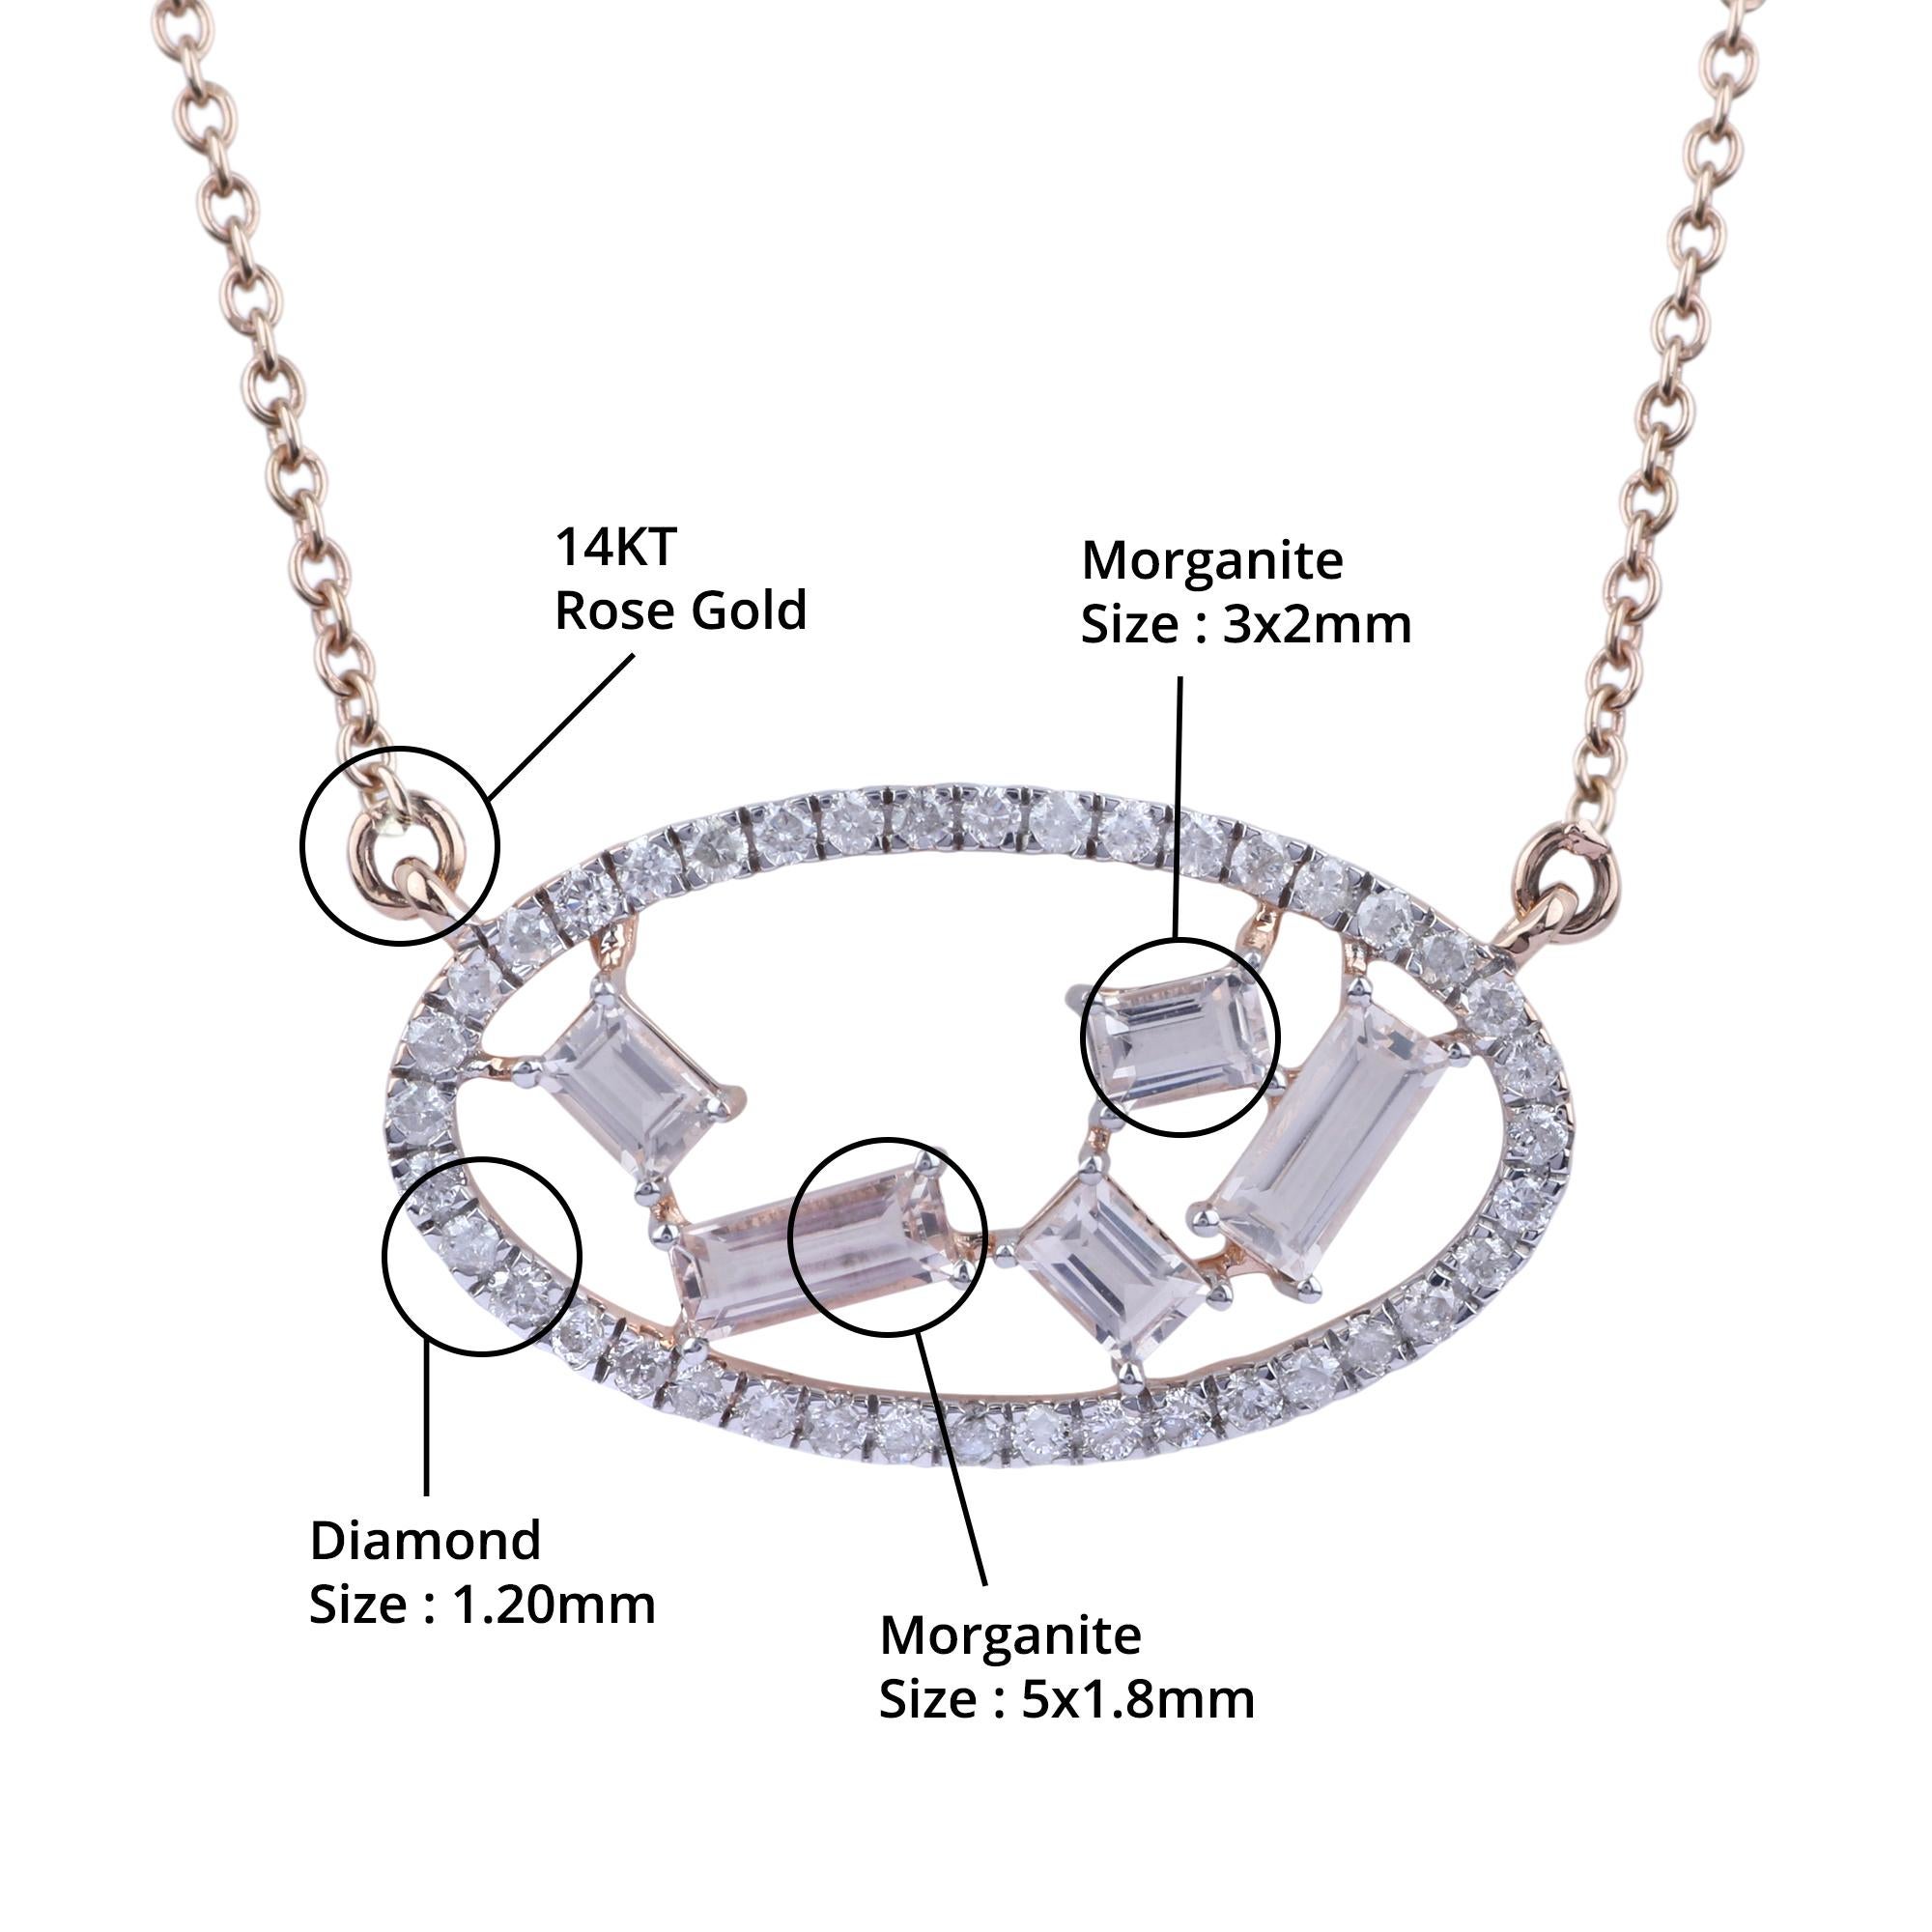 Item details:-

✦ SKU:- JNC00007RRR

✦ Material :- Gold

✦ Metal Purity : 14K Rose Gold

✦ Gemstone Specification:- 
✧ Clear Diamond Round (l1/H1) - 1.20 mm - 40
✧ Certified Moissanite (VVS/DE) - 3x2 mm - 3
✧ Certified Moissanite (VVS/DE) - 5x1.8 mm